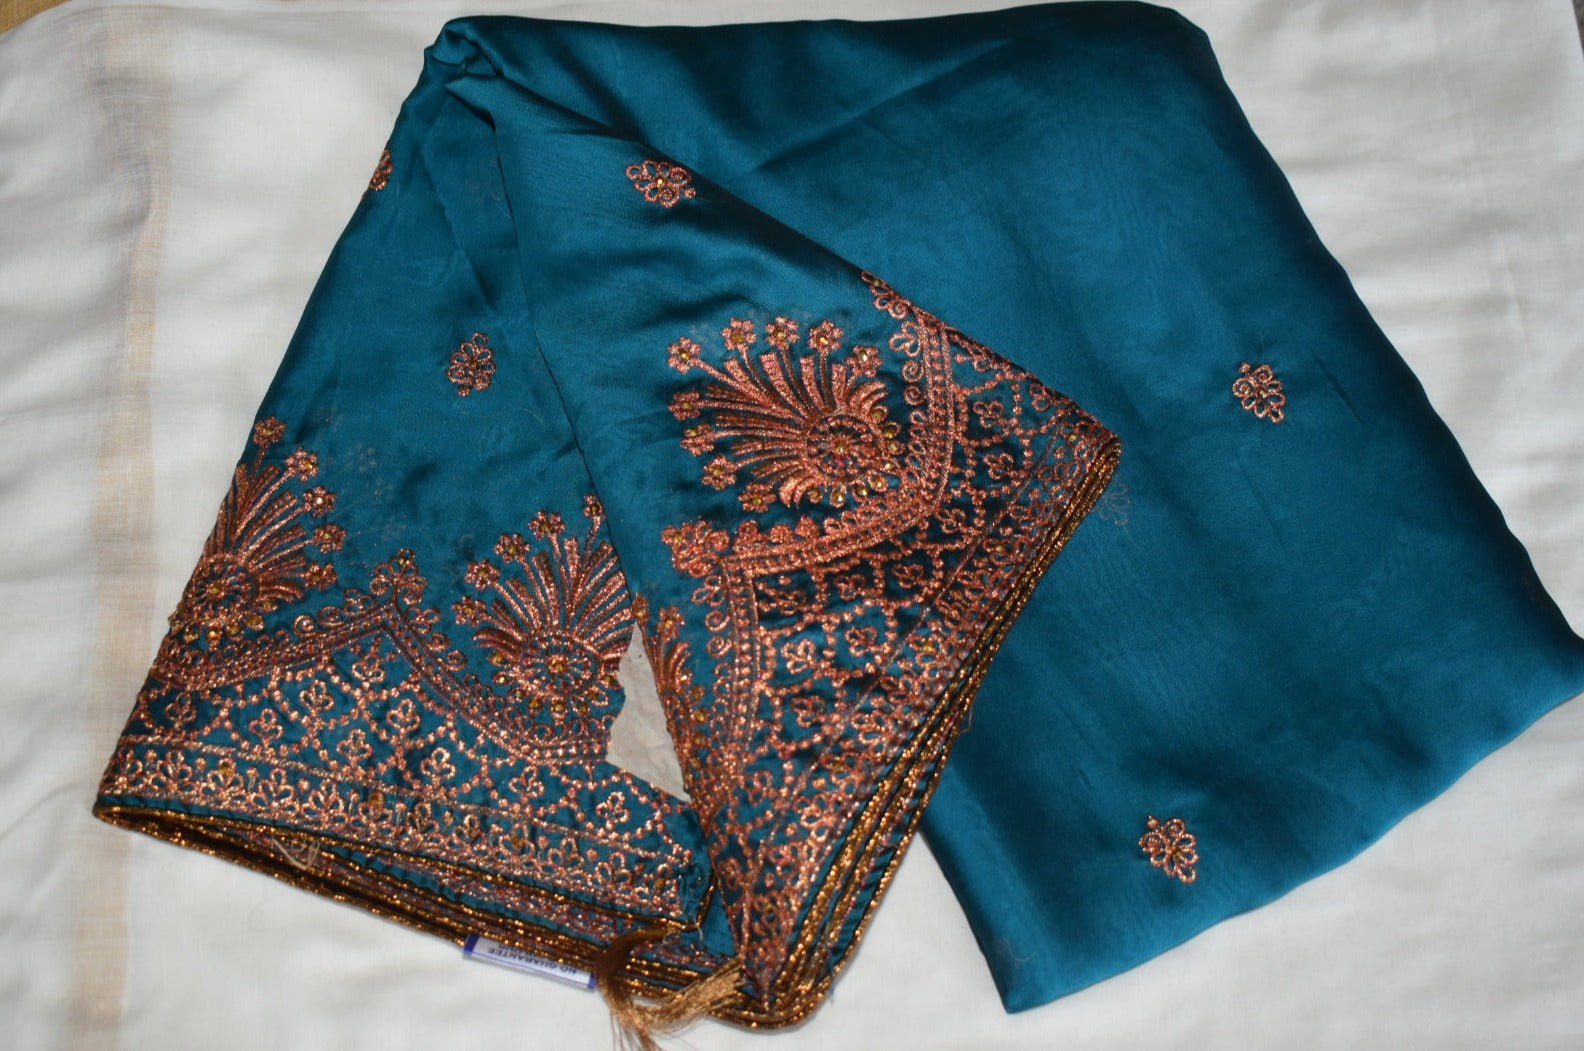 Blue Color - Georgette Silk Saree - Copper/ Rose Gold Resham Embroidered